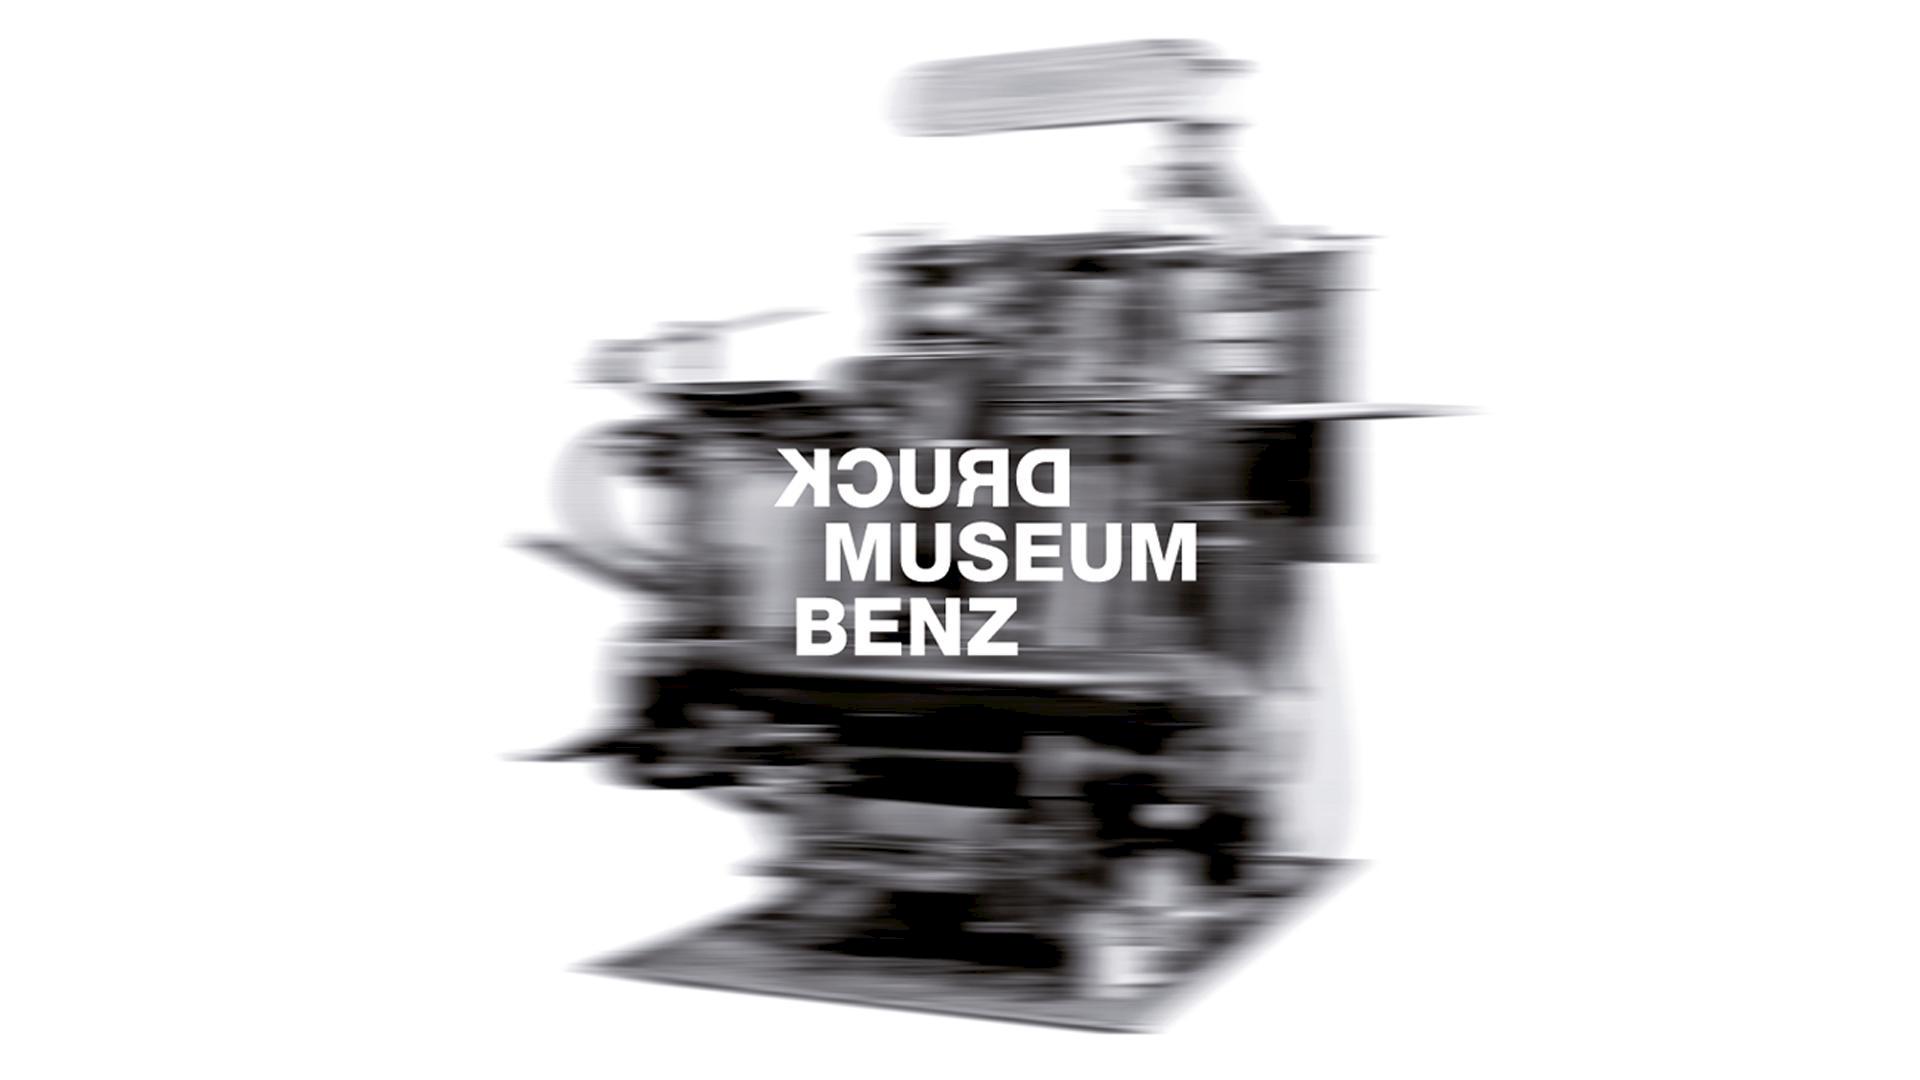 Druckmuseum Benz